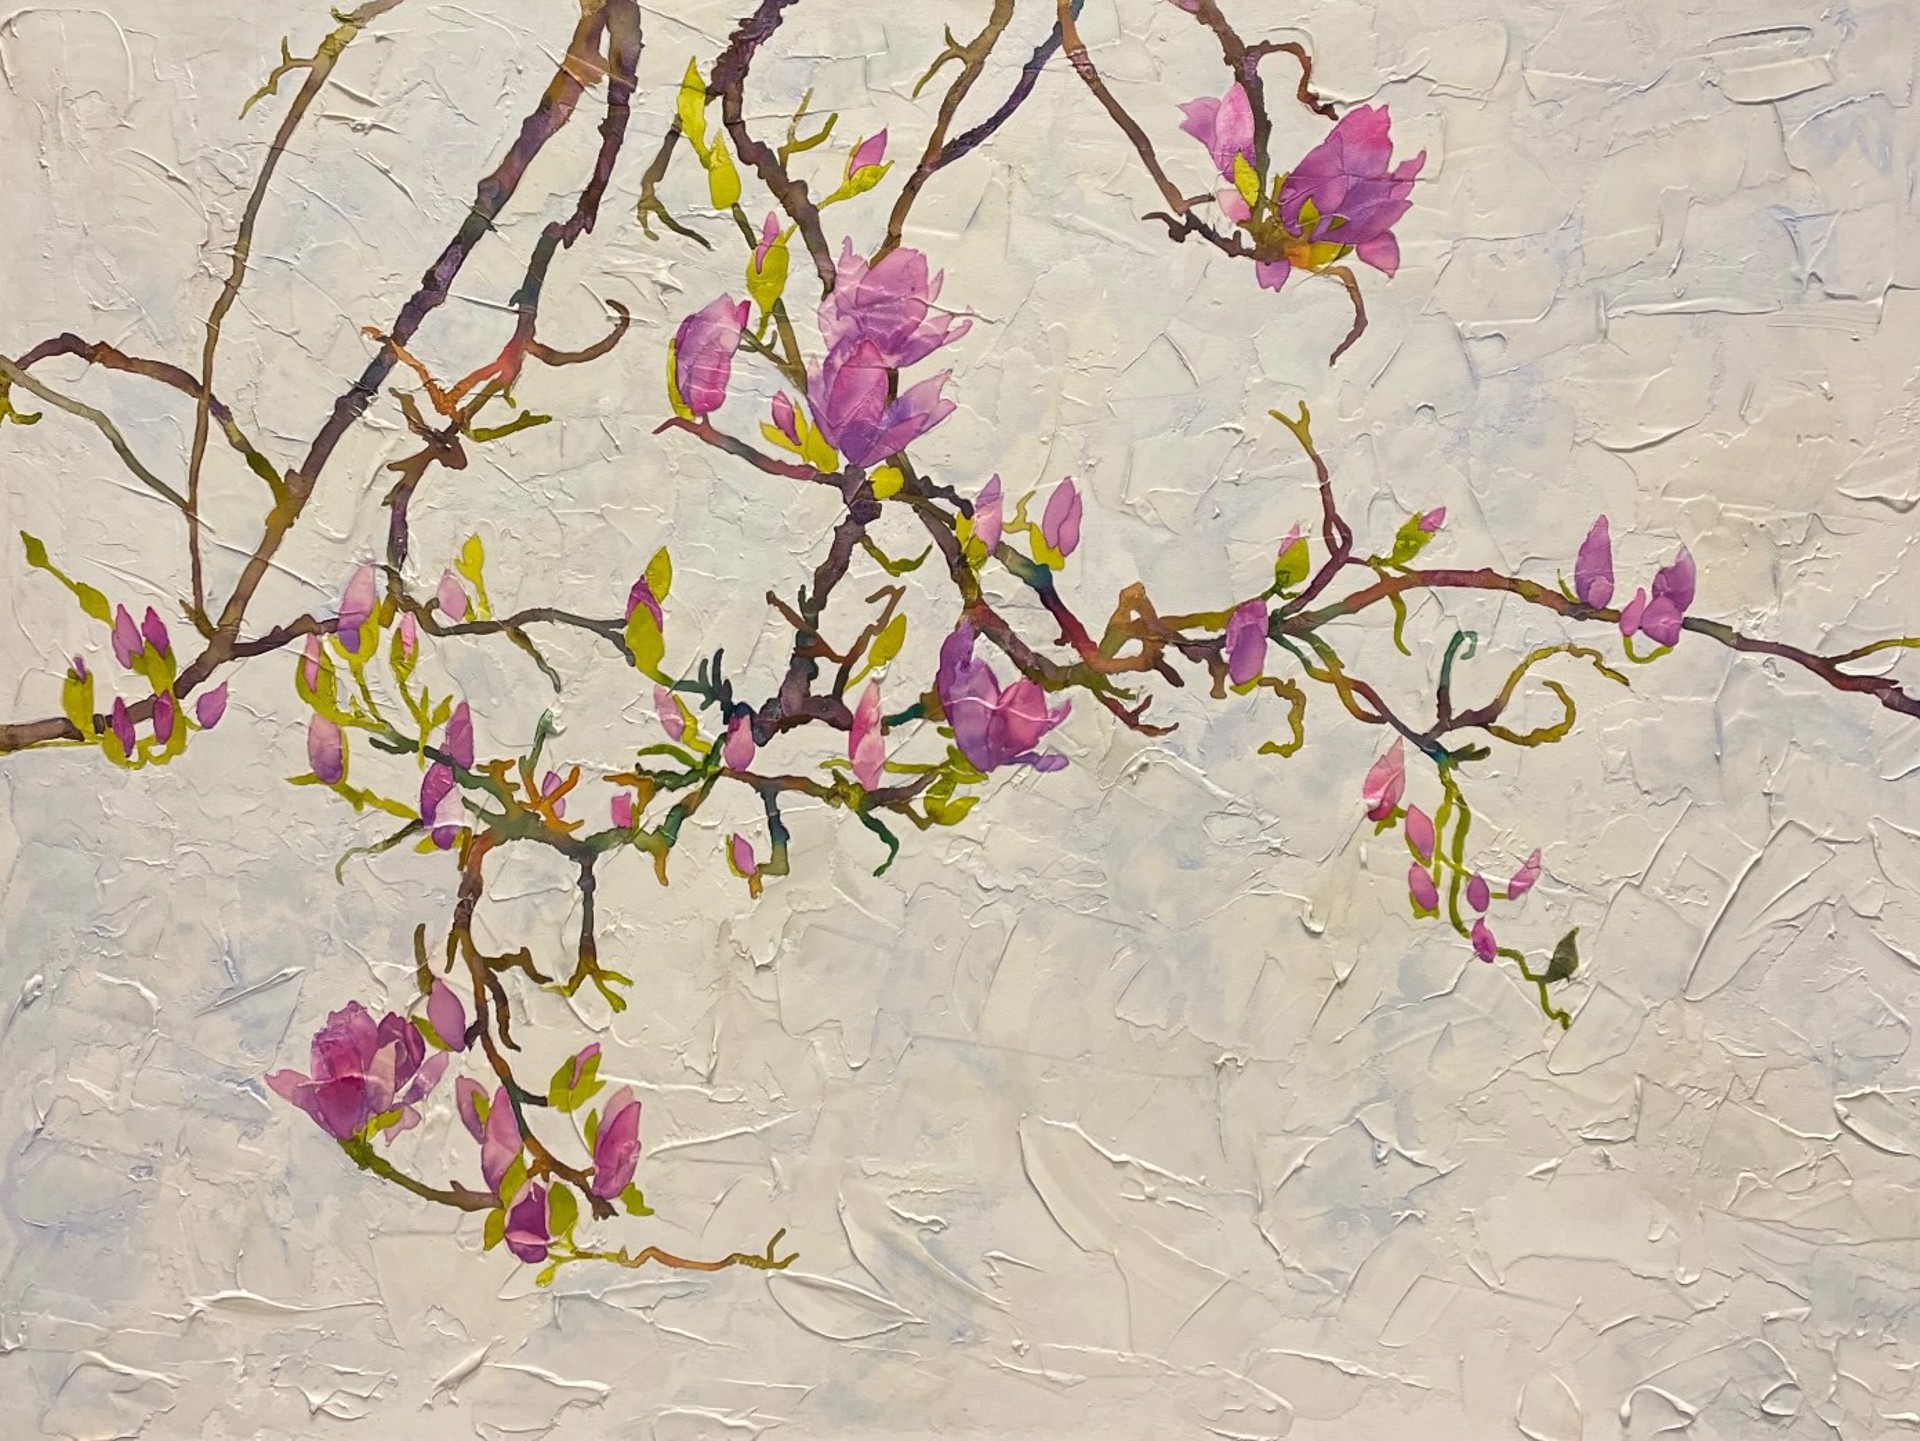 Japanese Magnolias by Bob Ichter